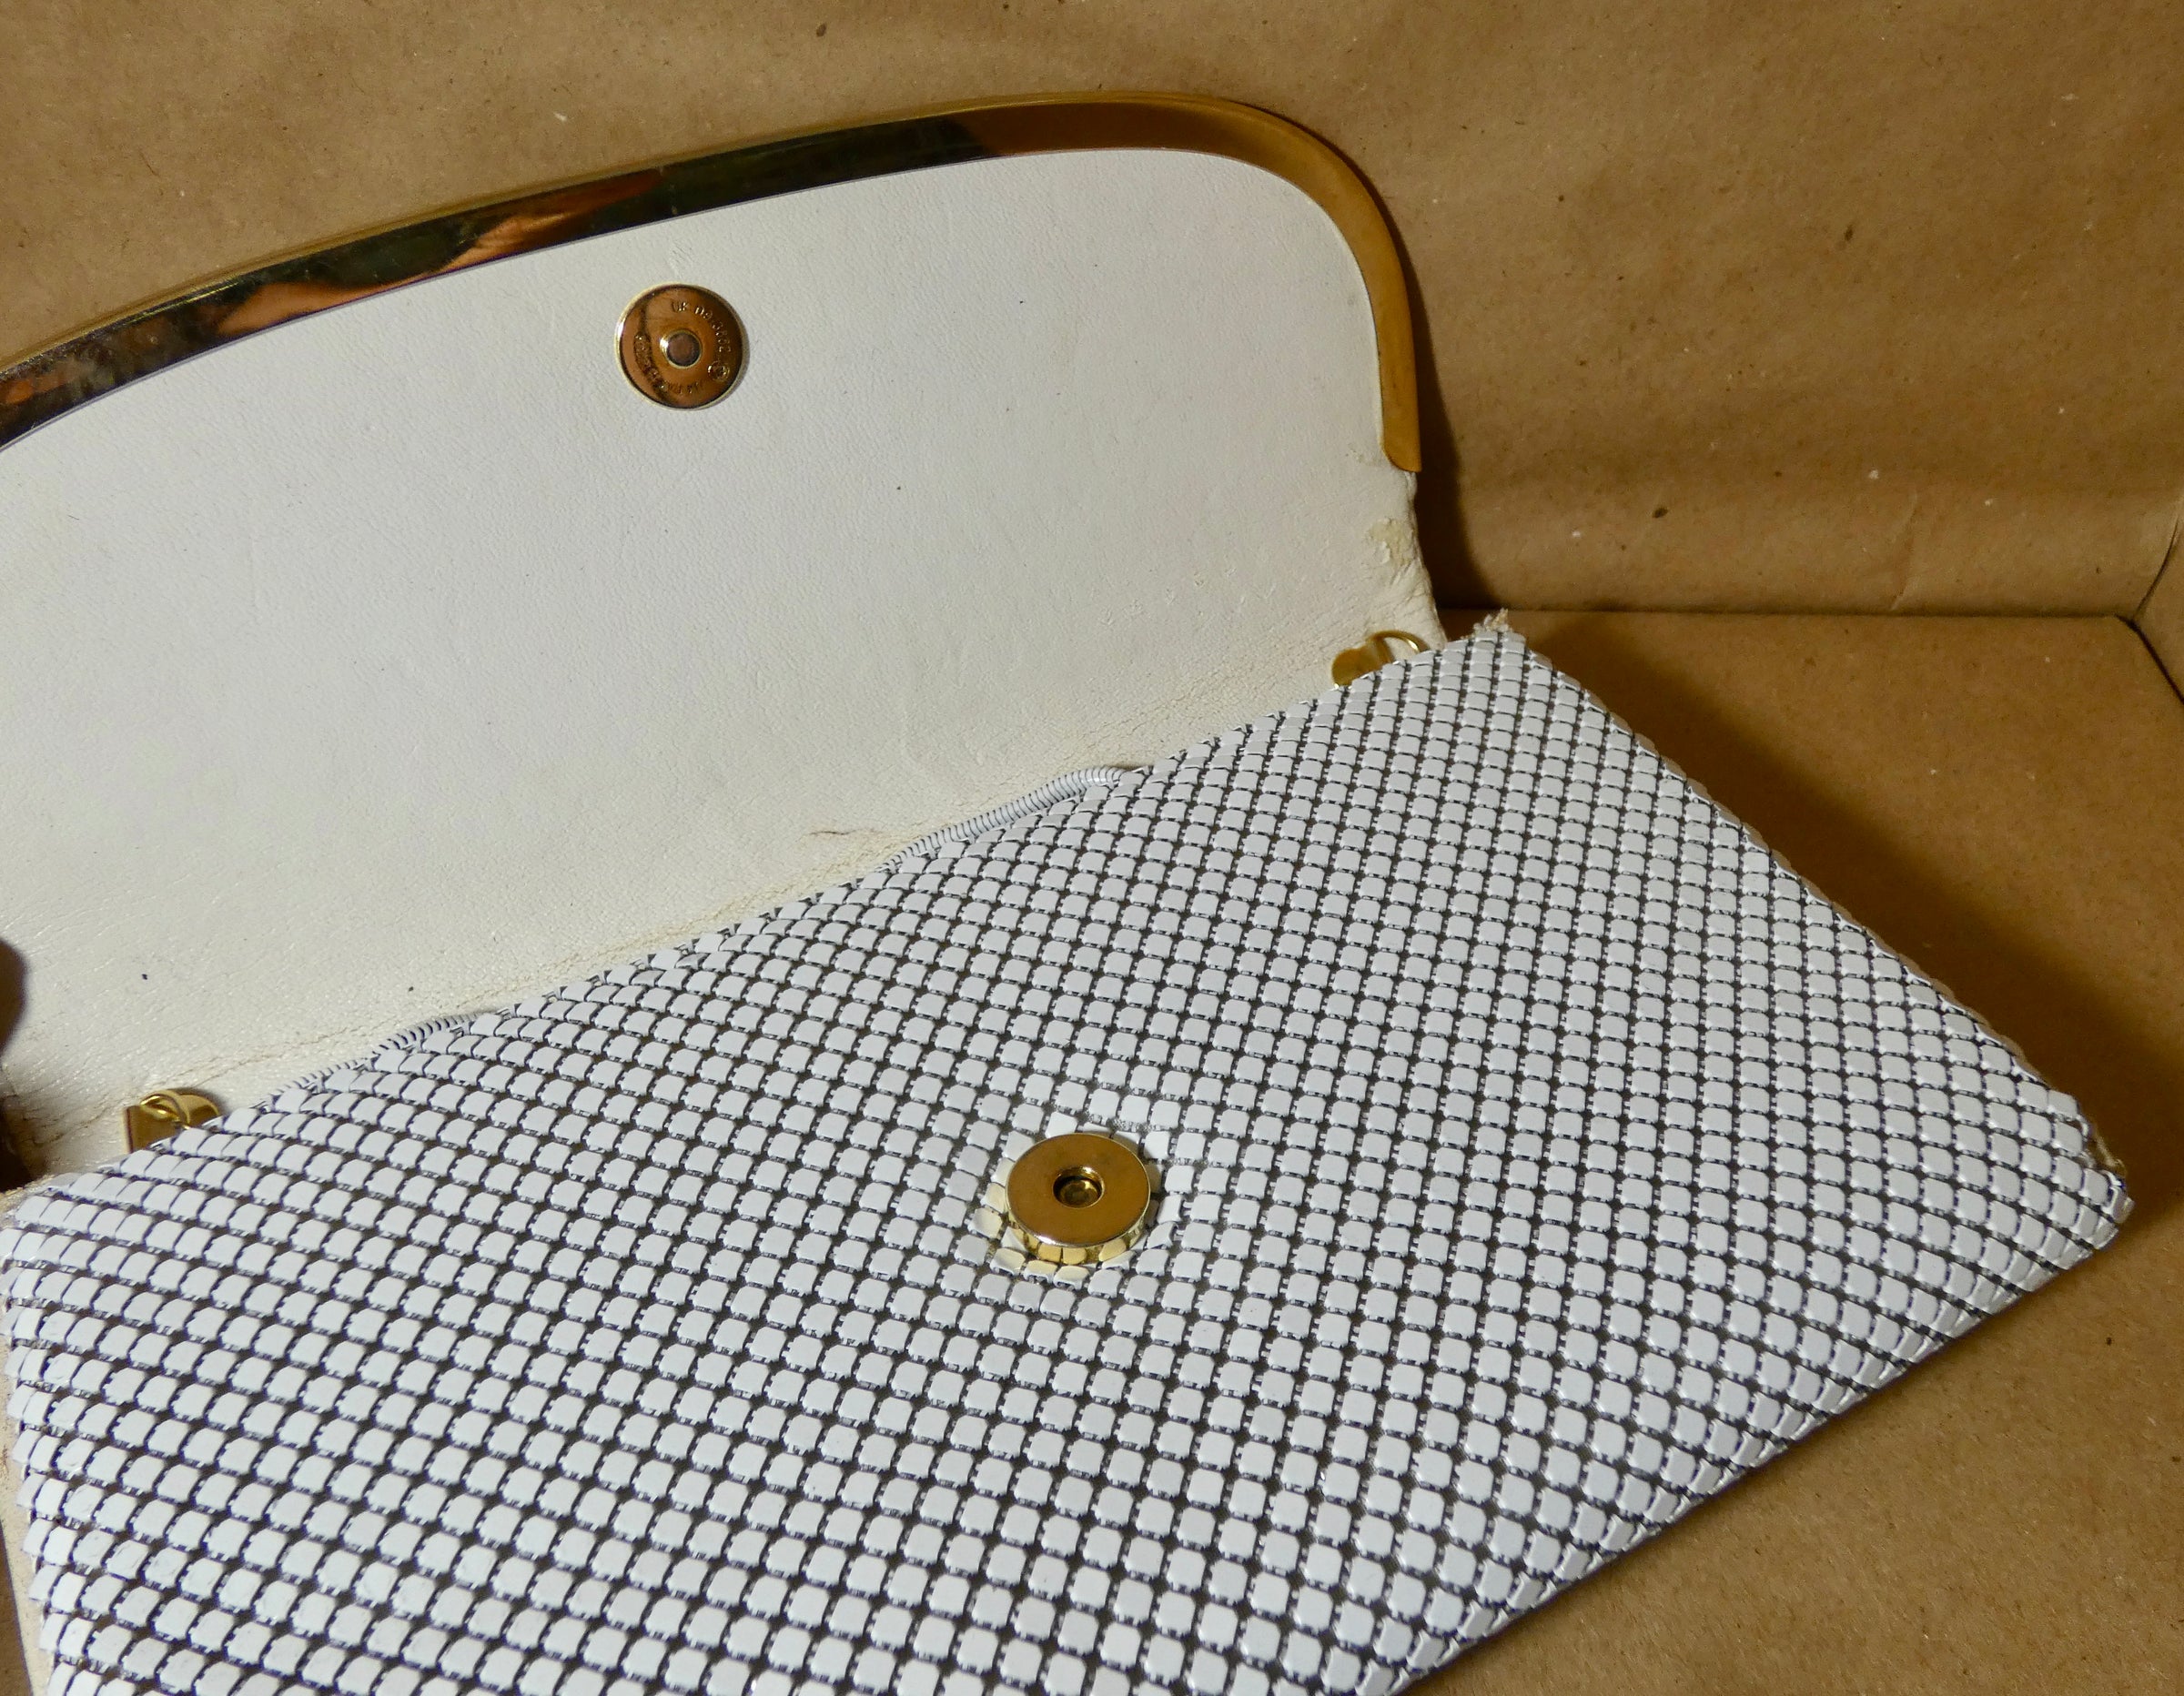 Vintage Handbag, White Mesh Chain Mail Purse